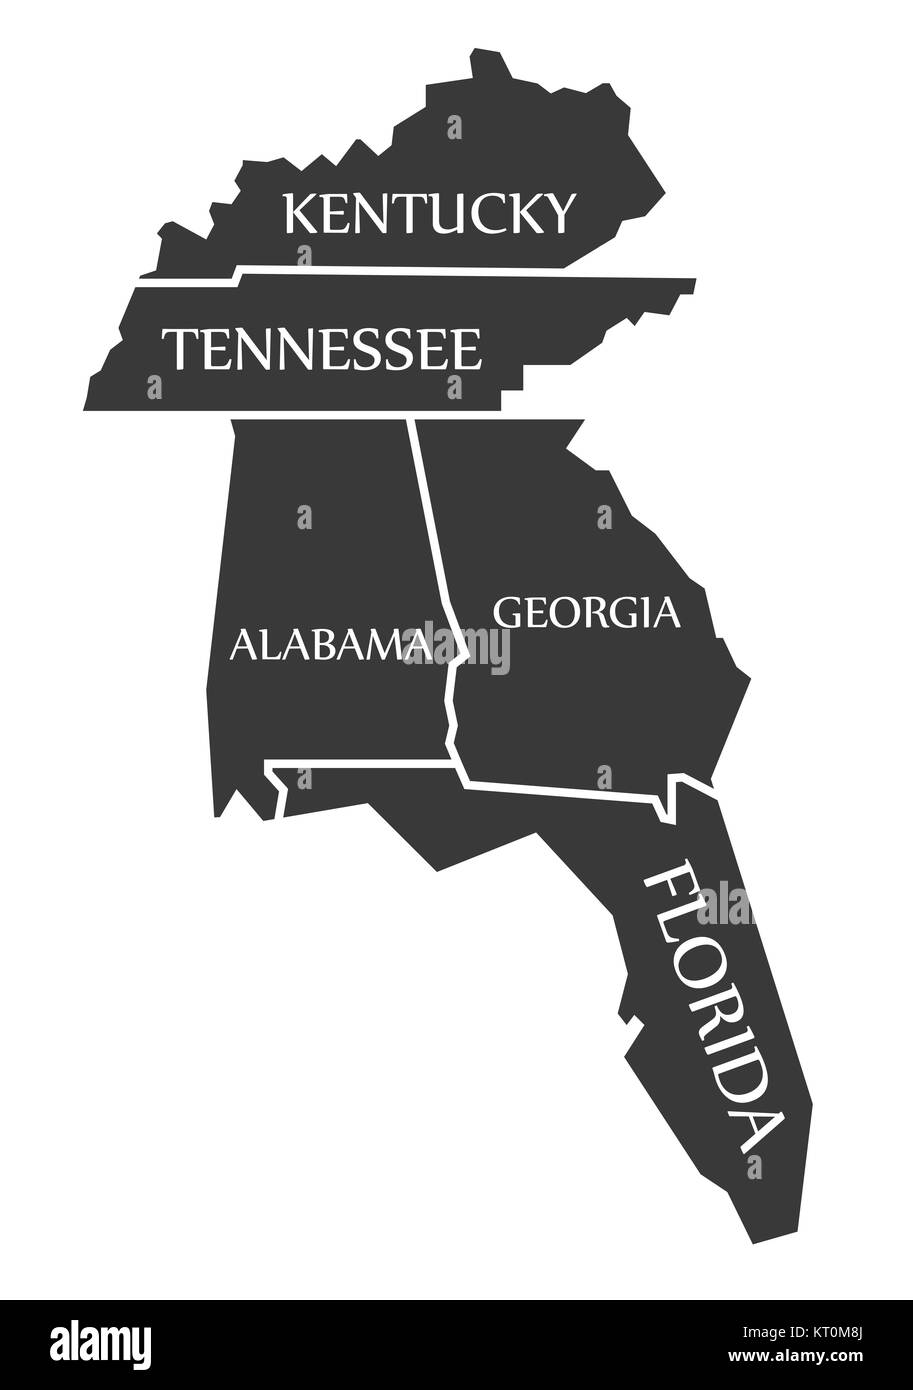 Kentucky - Tennessee - Alabama - Georgia - Florida Mappa nero marcato Foto Stock